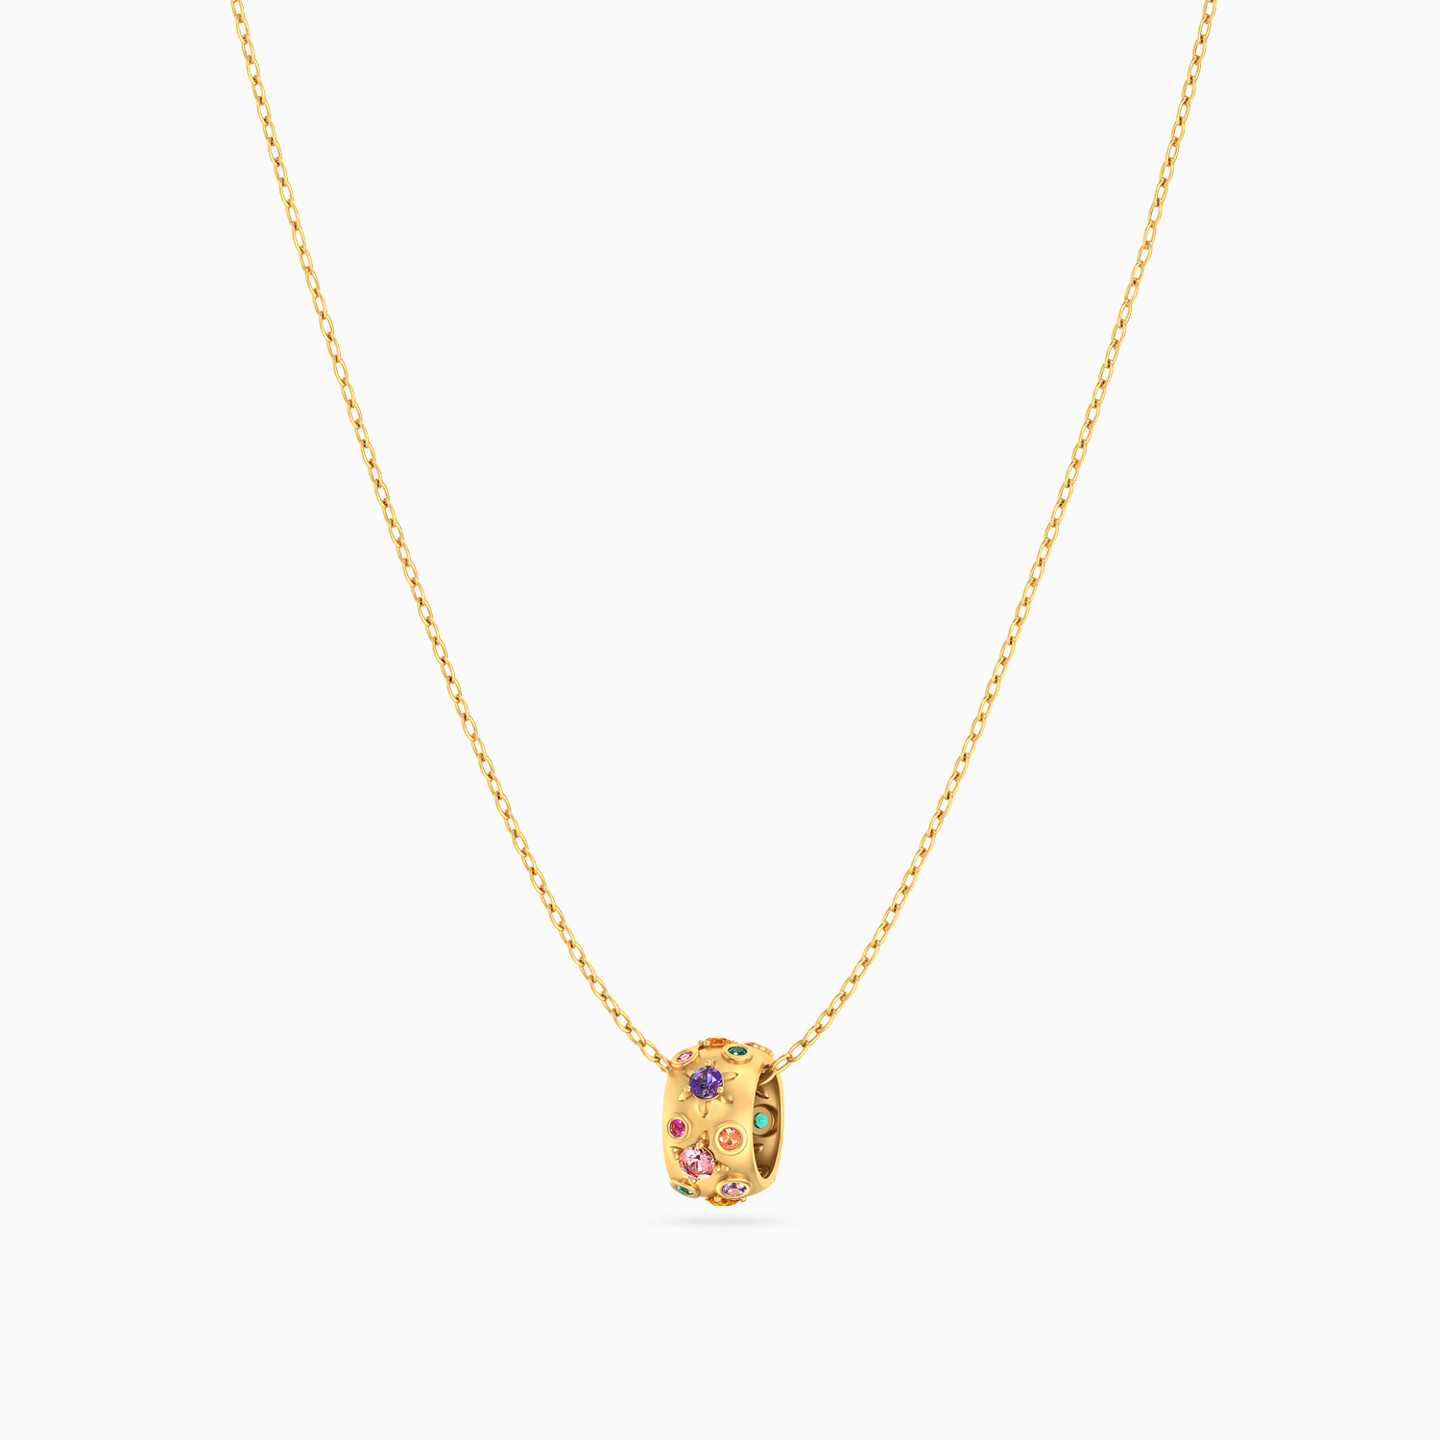 18K Gold Colored Stones Pendant Necklace - 3